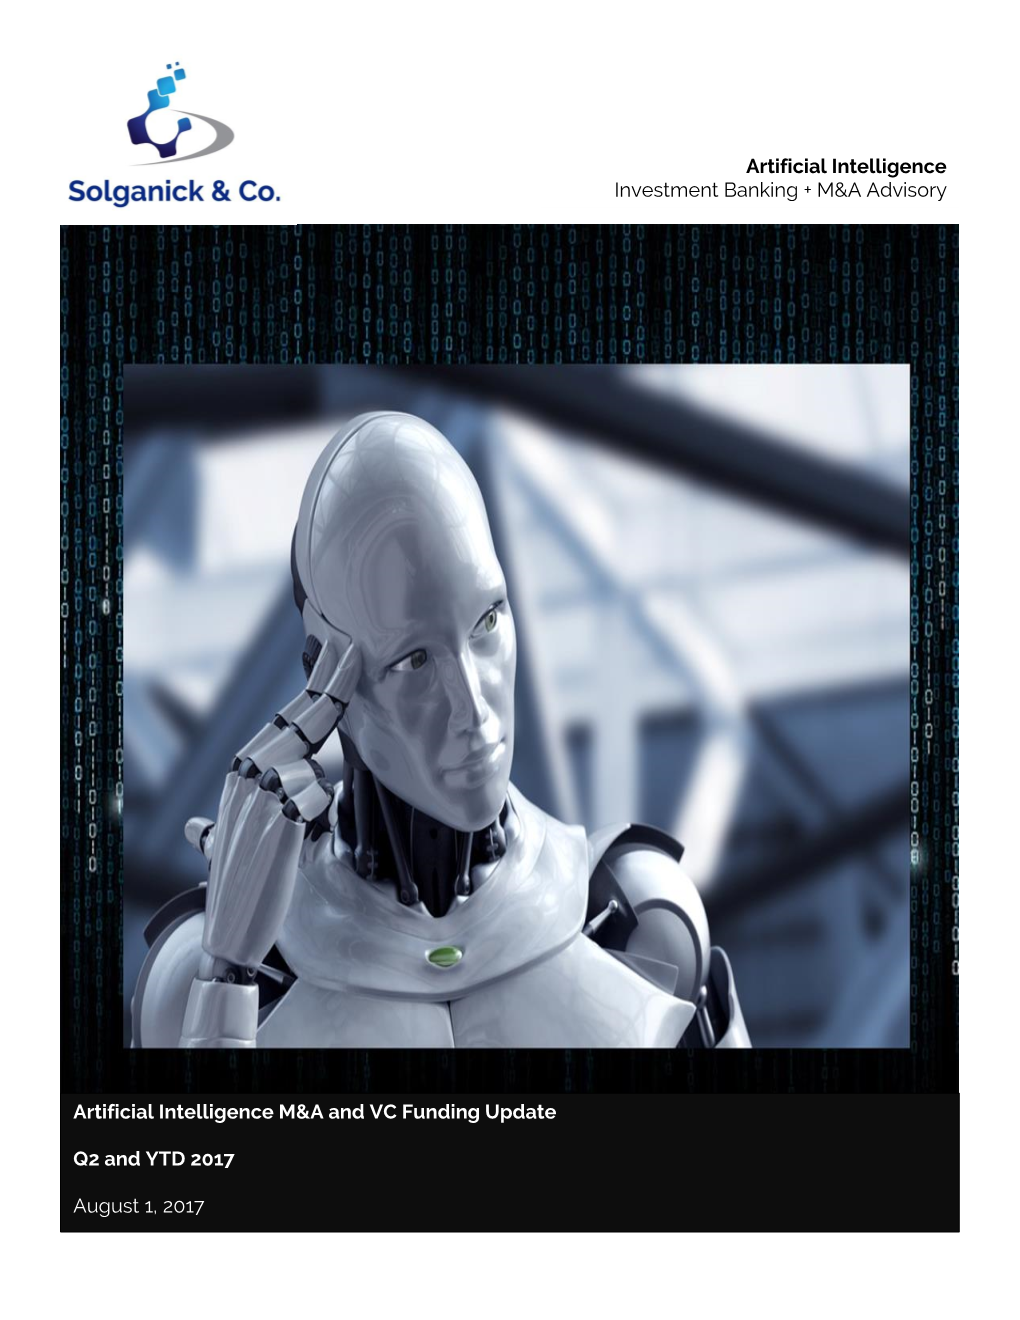 Solganick & Co Artificial Intelligence M&A Update